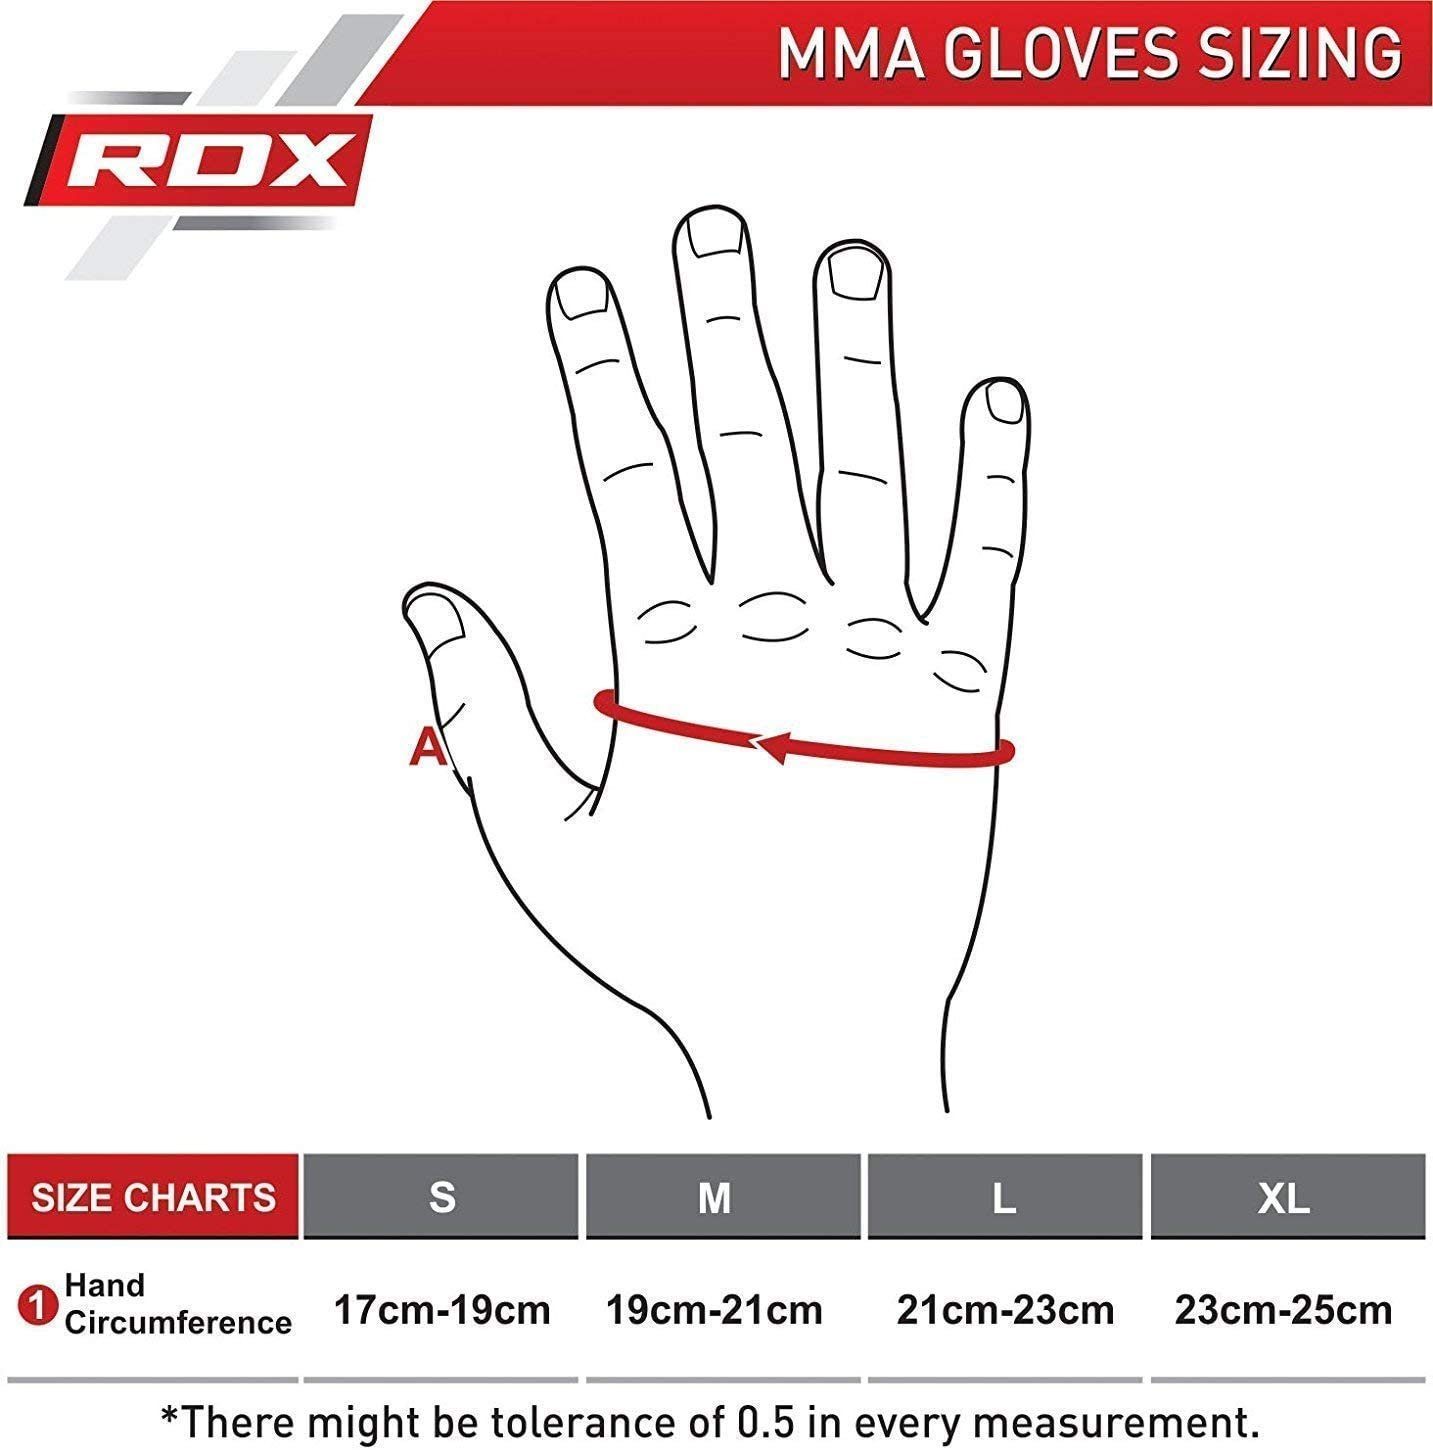 Professional Sparring Arts Sports Handschuhe Martial Boxsack RDX RDX MMA MMA-Handschuhe